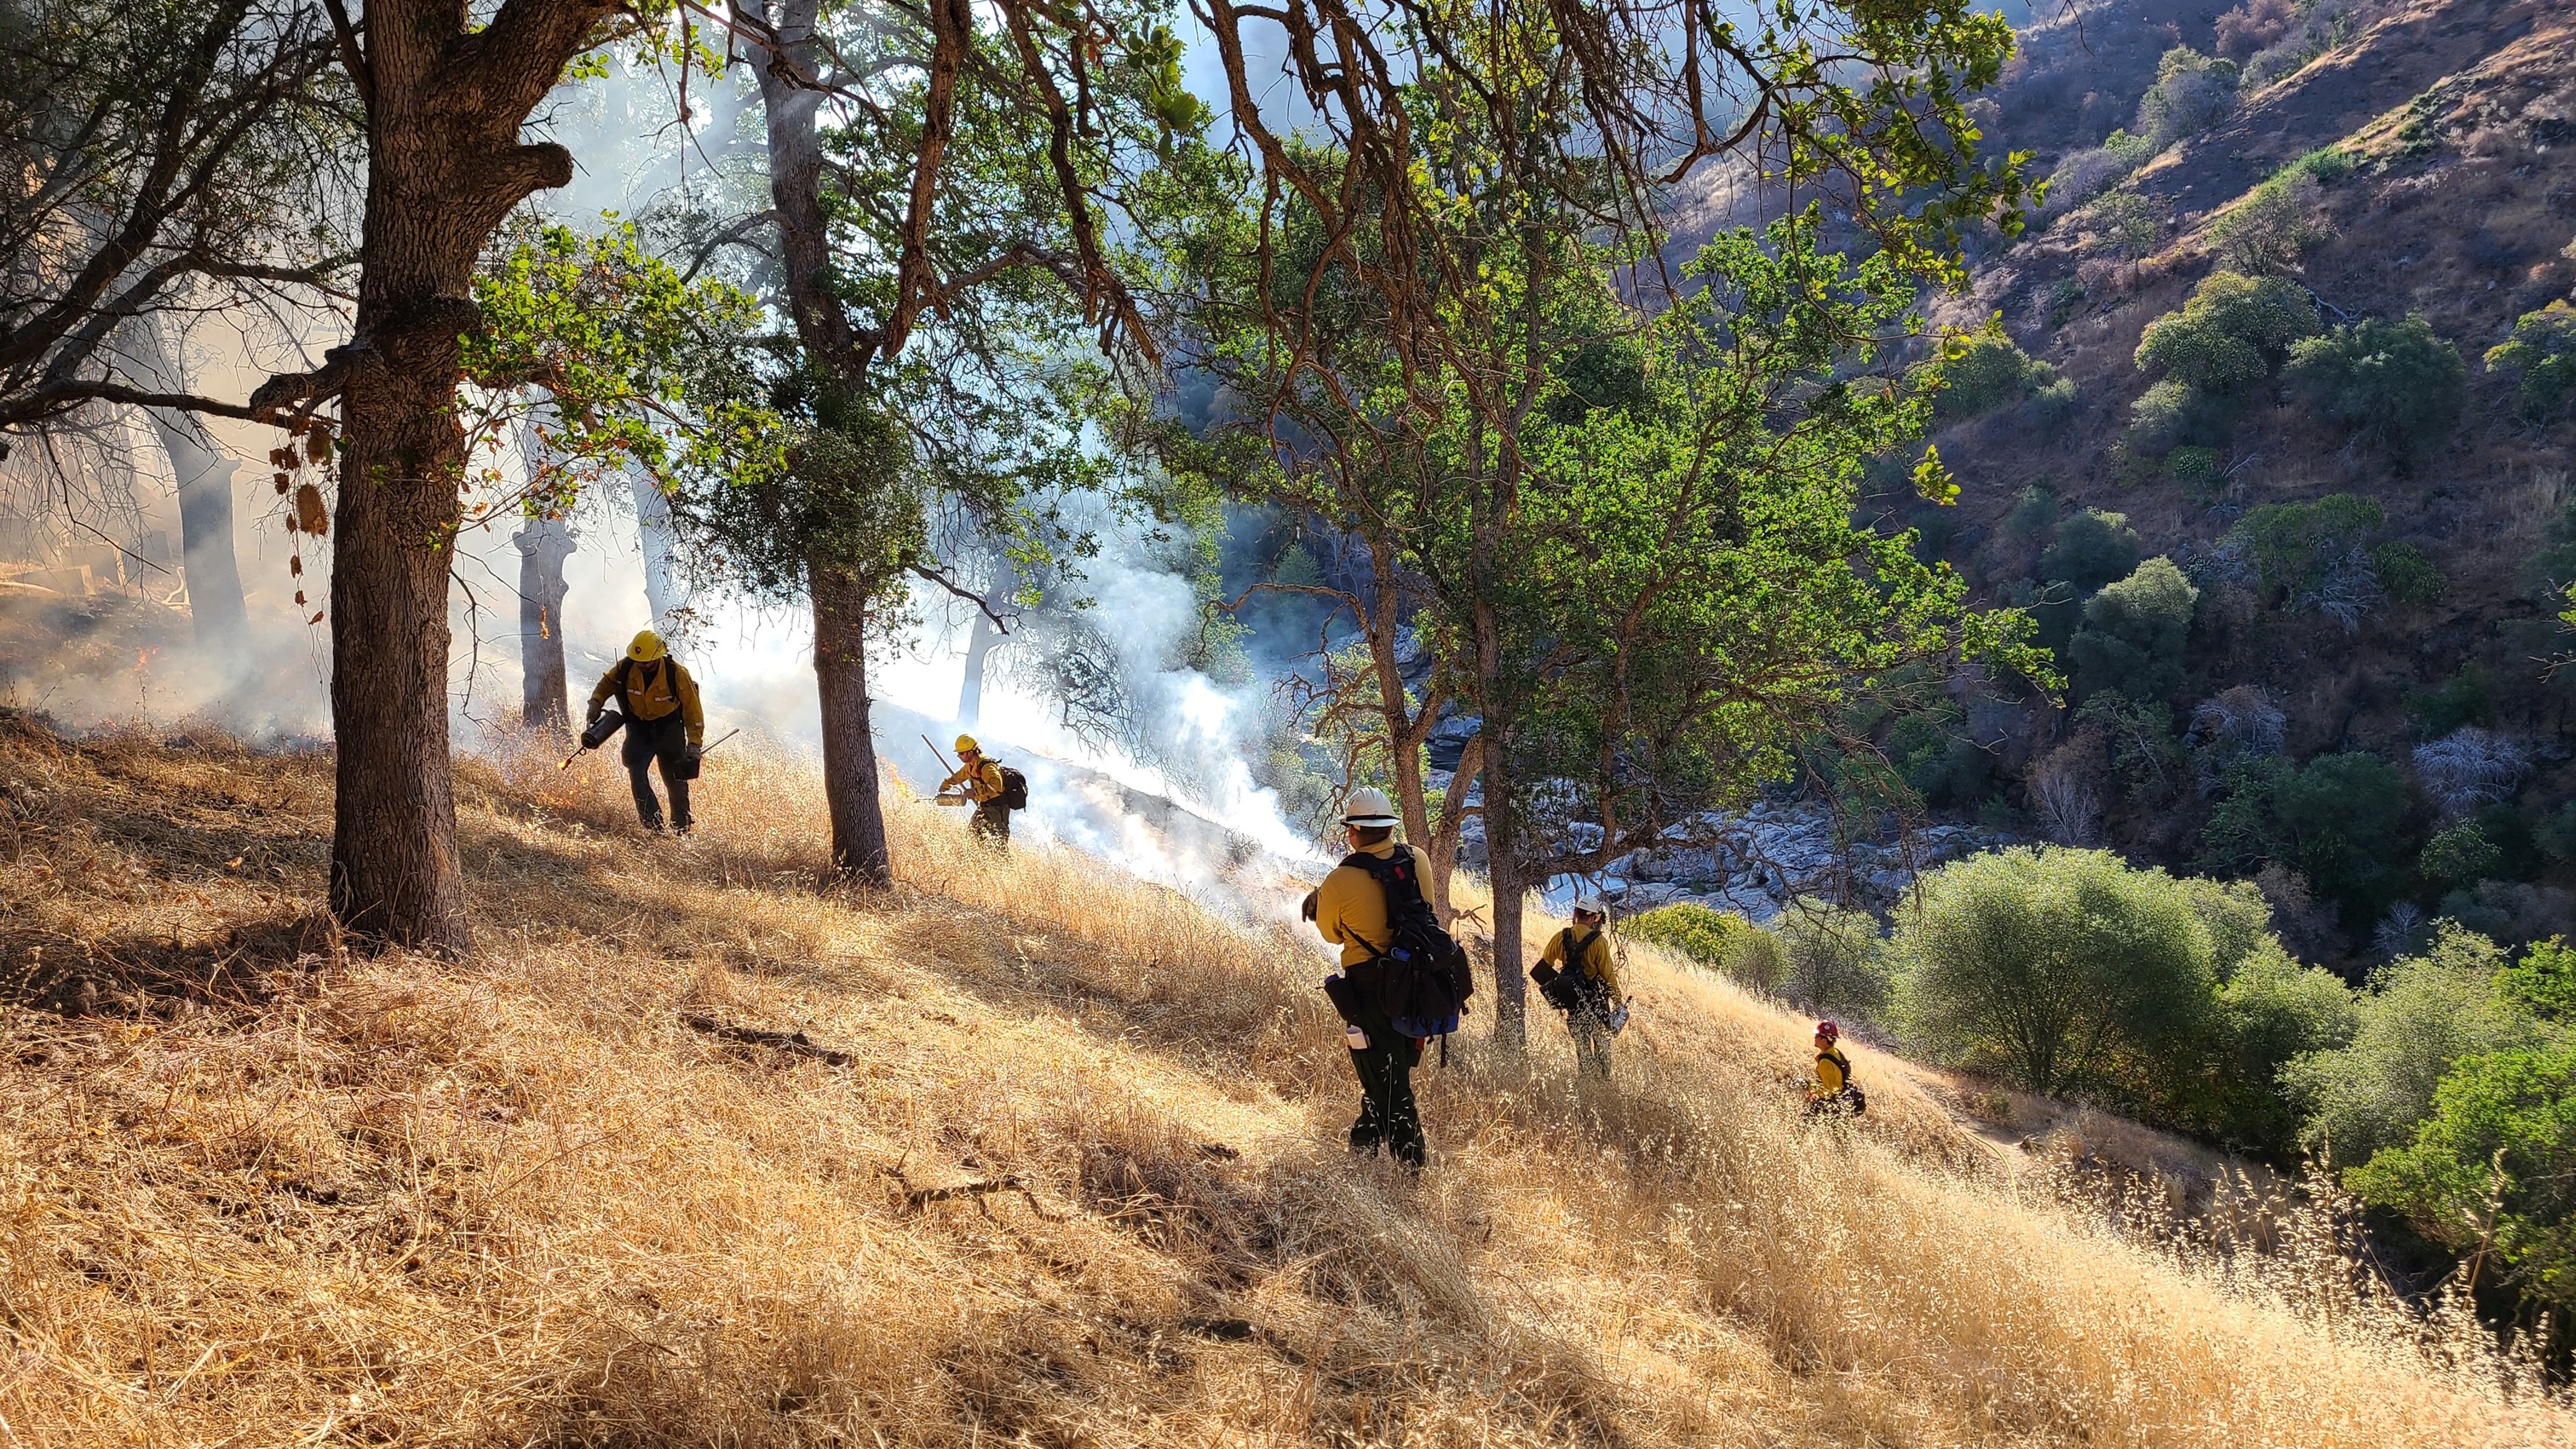 Park fire fighters begin prescribed burn on a grassy slope